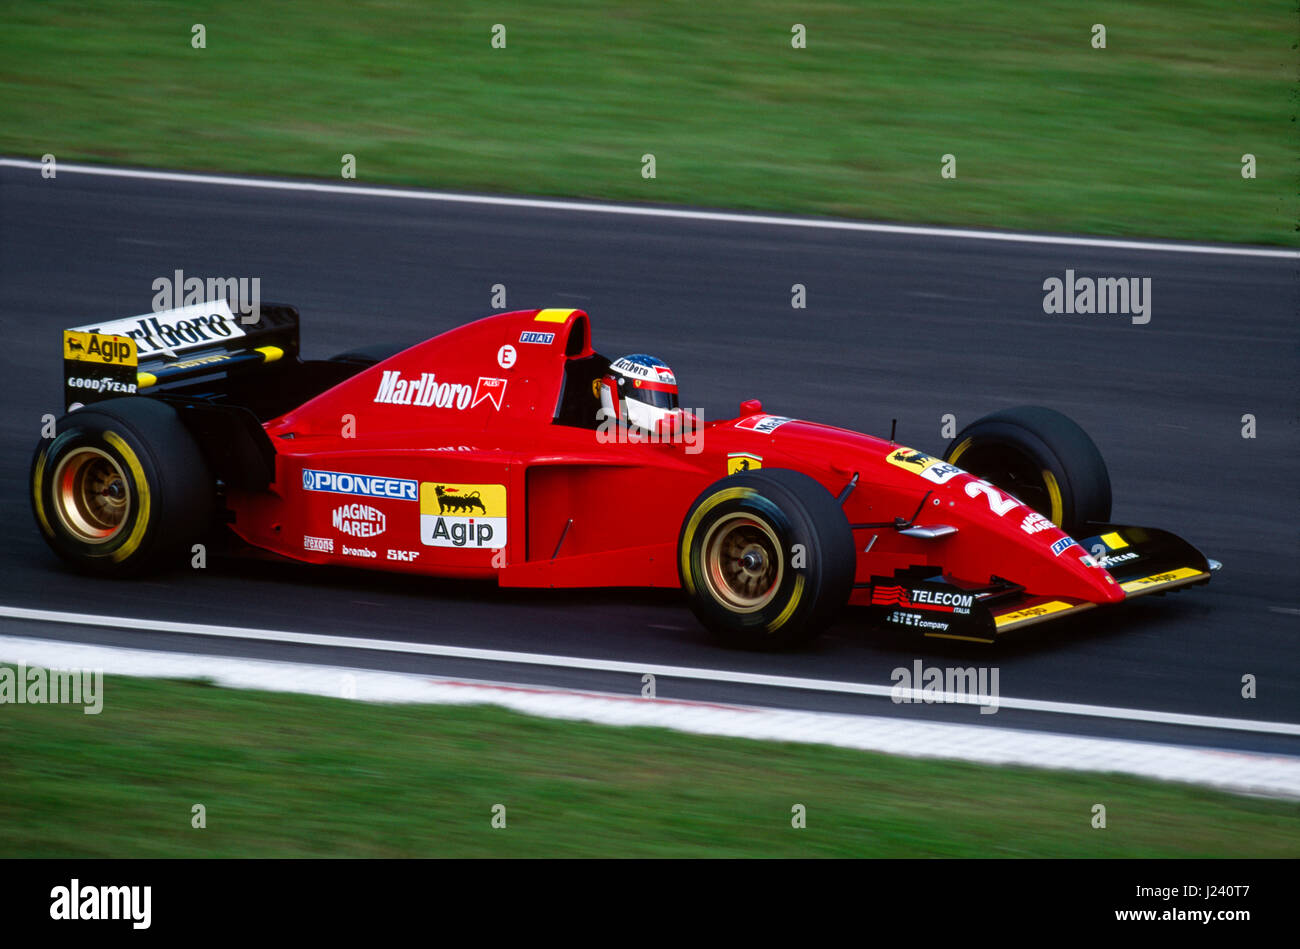 F1, Ferrari, jean Alesi, Gp San Marin 1995 Stock Photo - Alamy